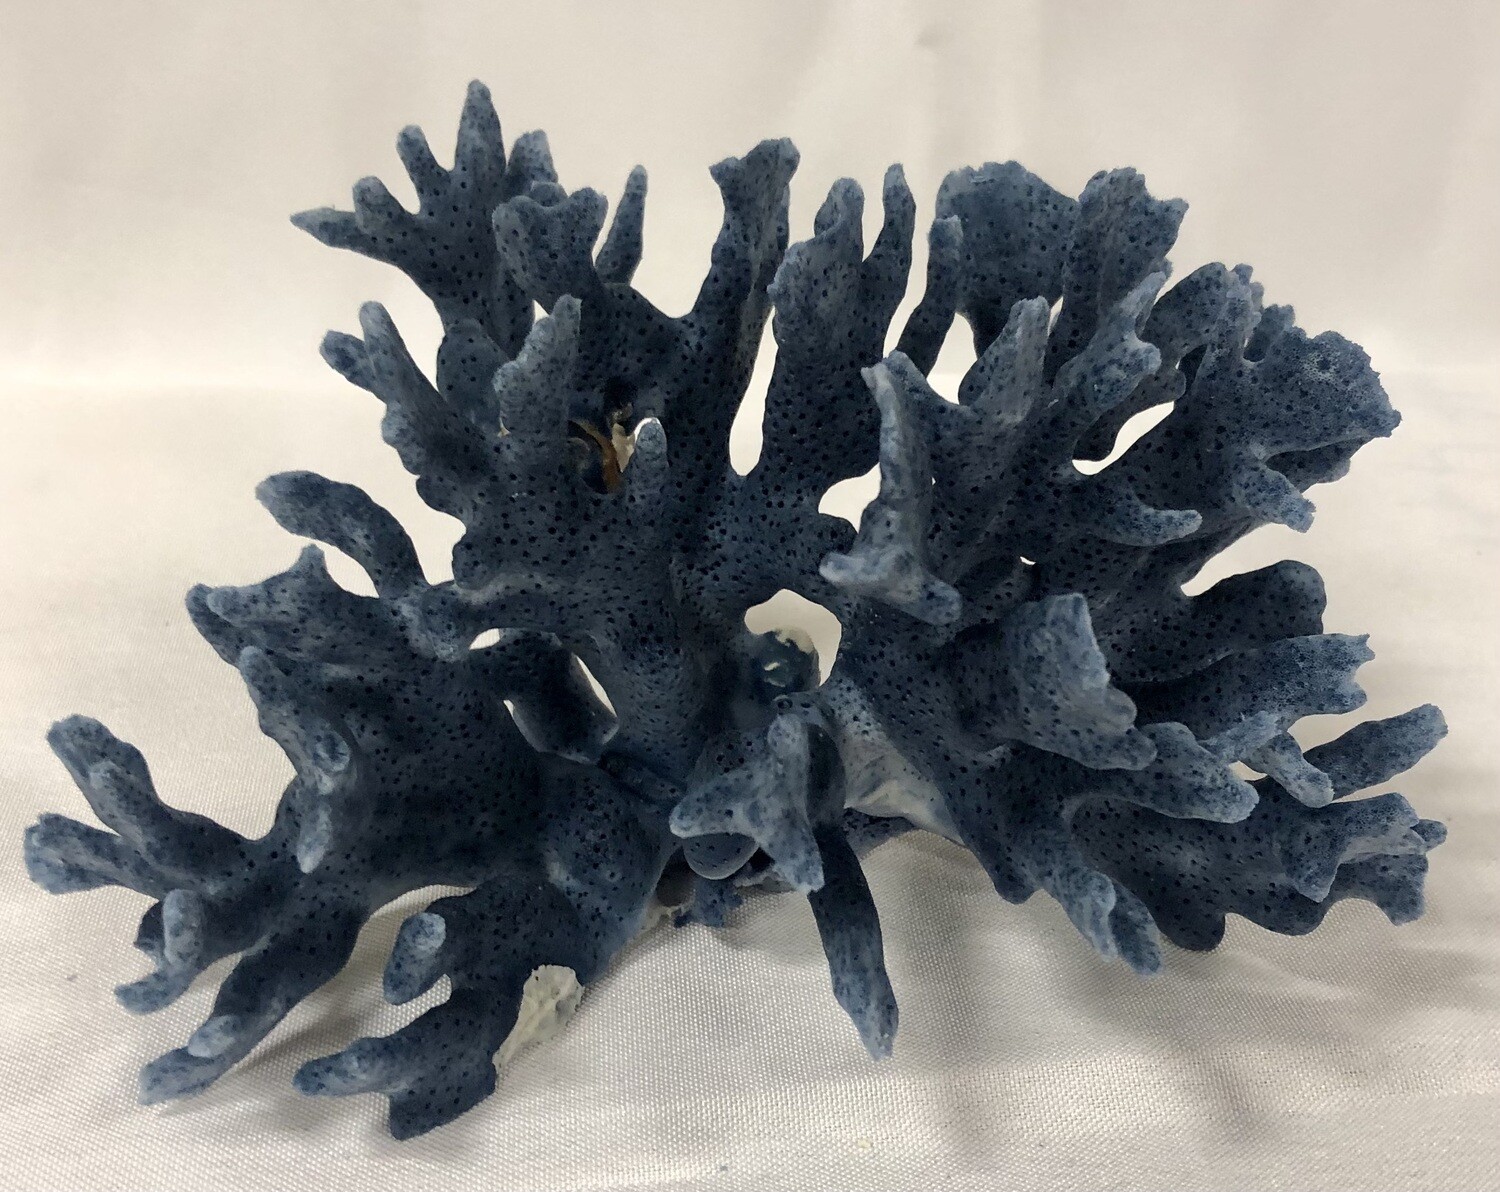 Authentic Blue Coral Specimen 5-7"